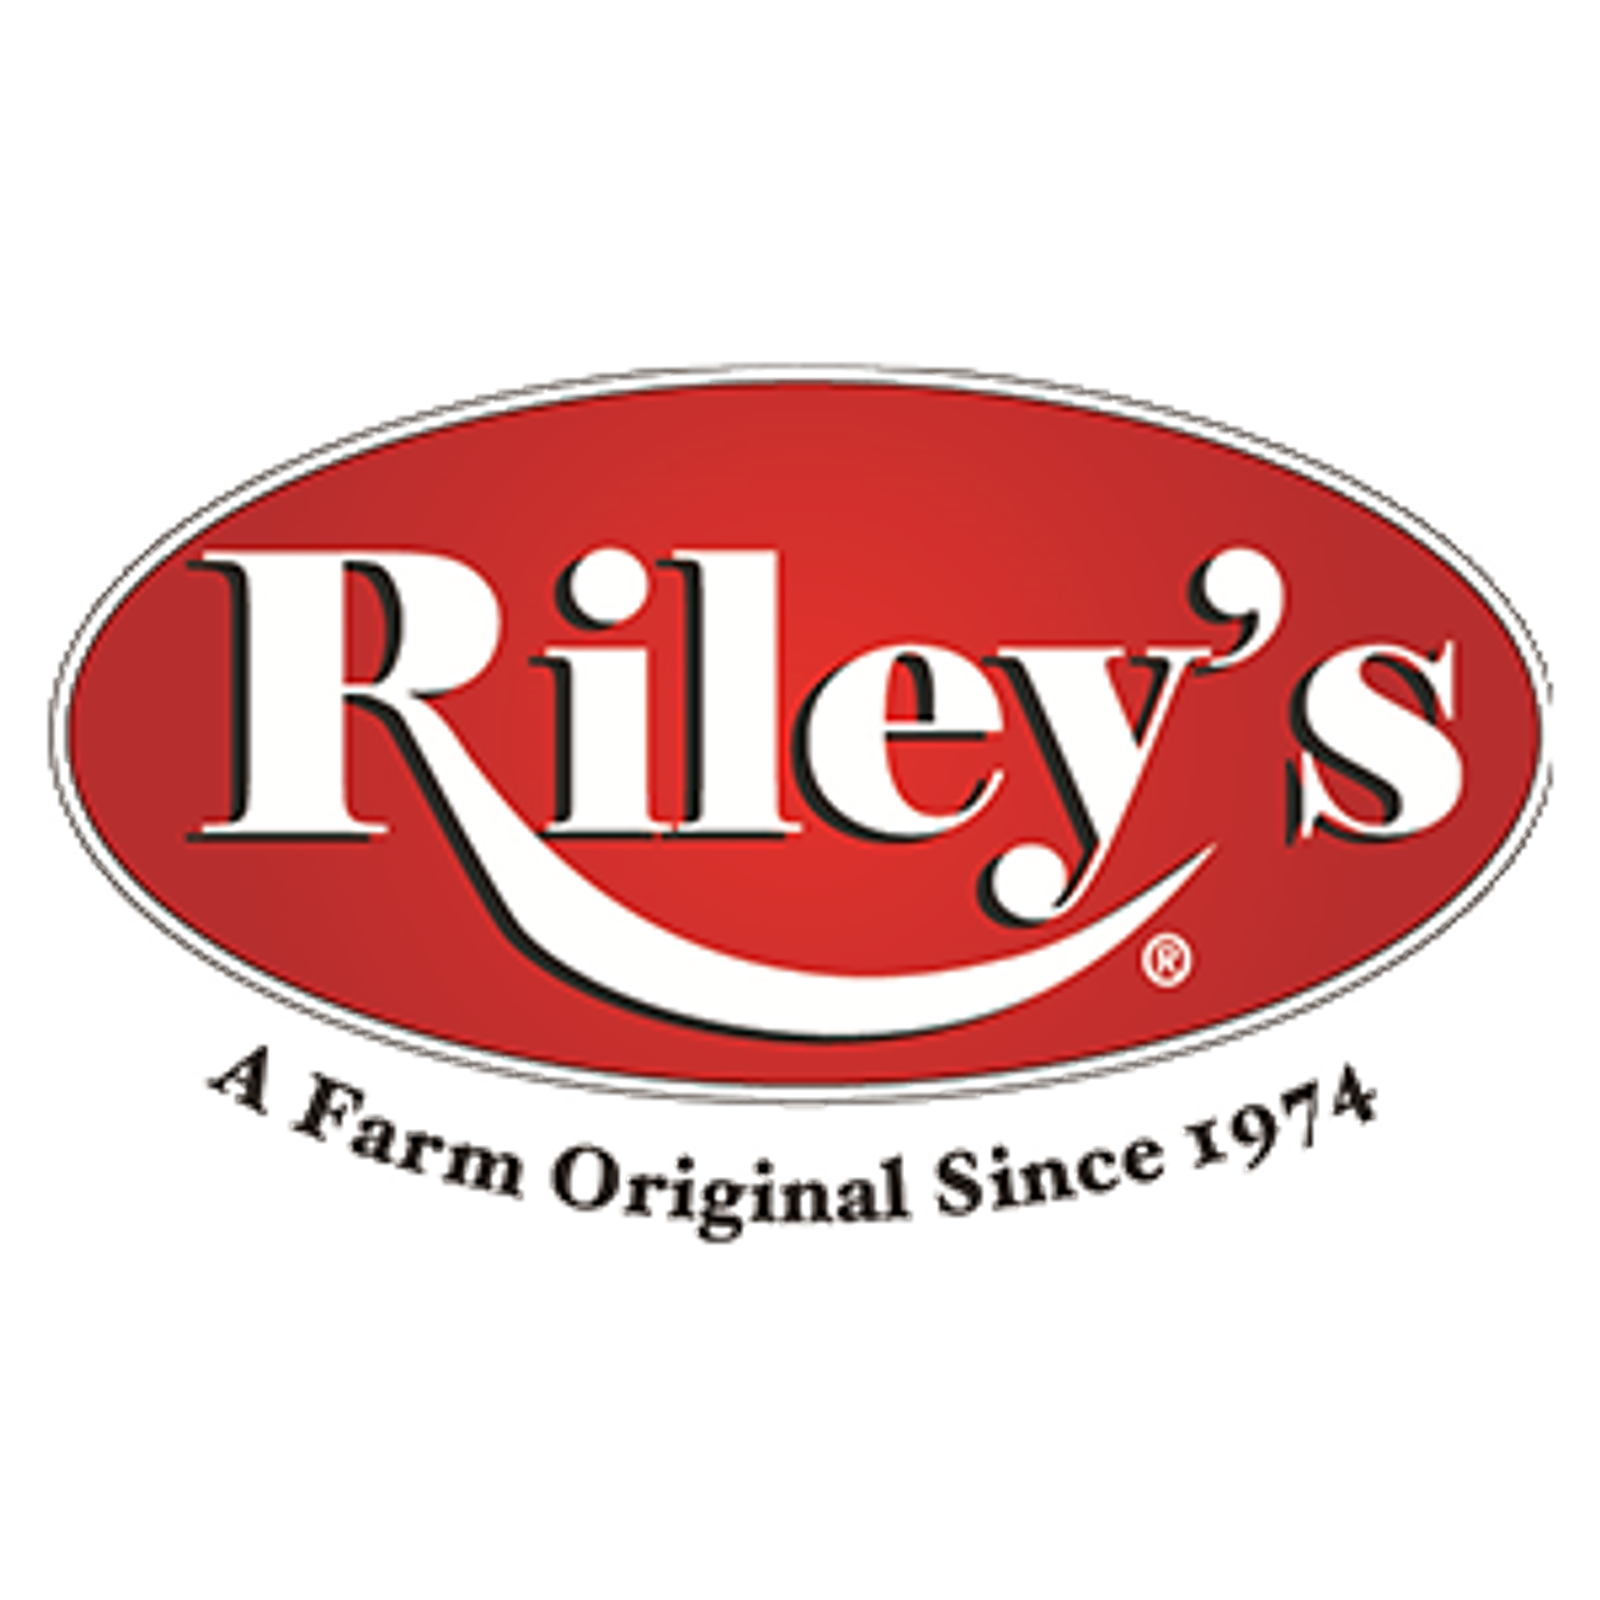 Riley's